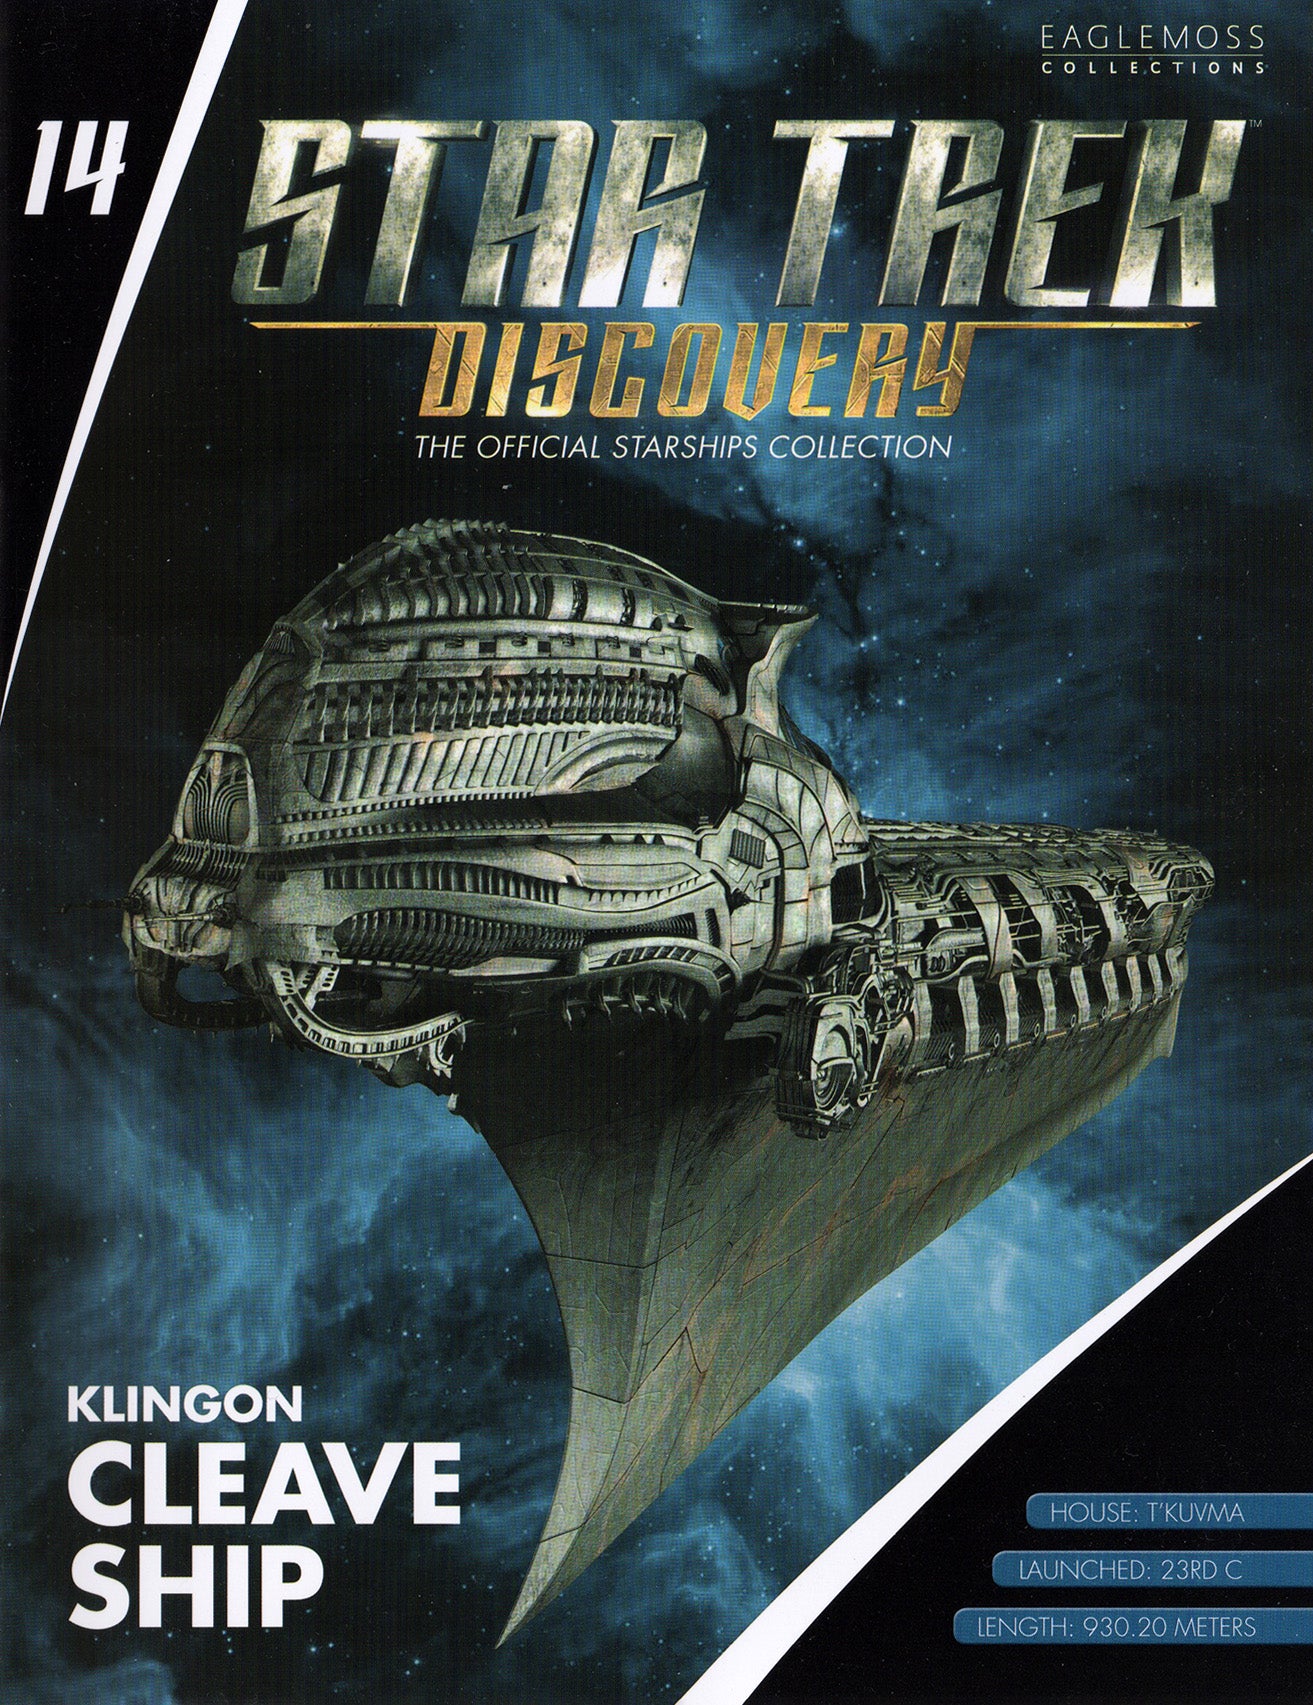 SSDUK014 Klingon Cleeve Ship Discovery Ships Modèle de navire moulé sous pression (Eaglemoss / Star Trek)SSDUK014 Klingon Cleeve Ship Discovery Ships Modèle de navire moulé sous pression (Eaglemoss / Star Trek)